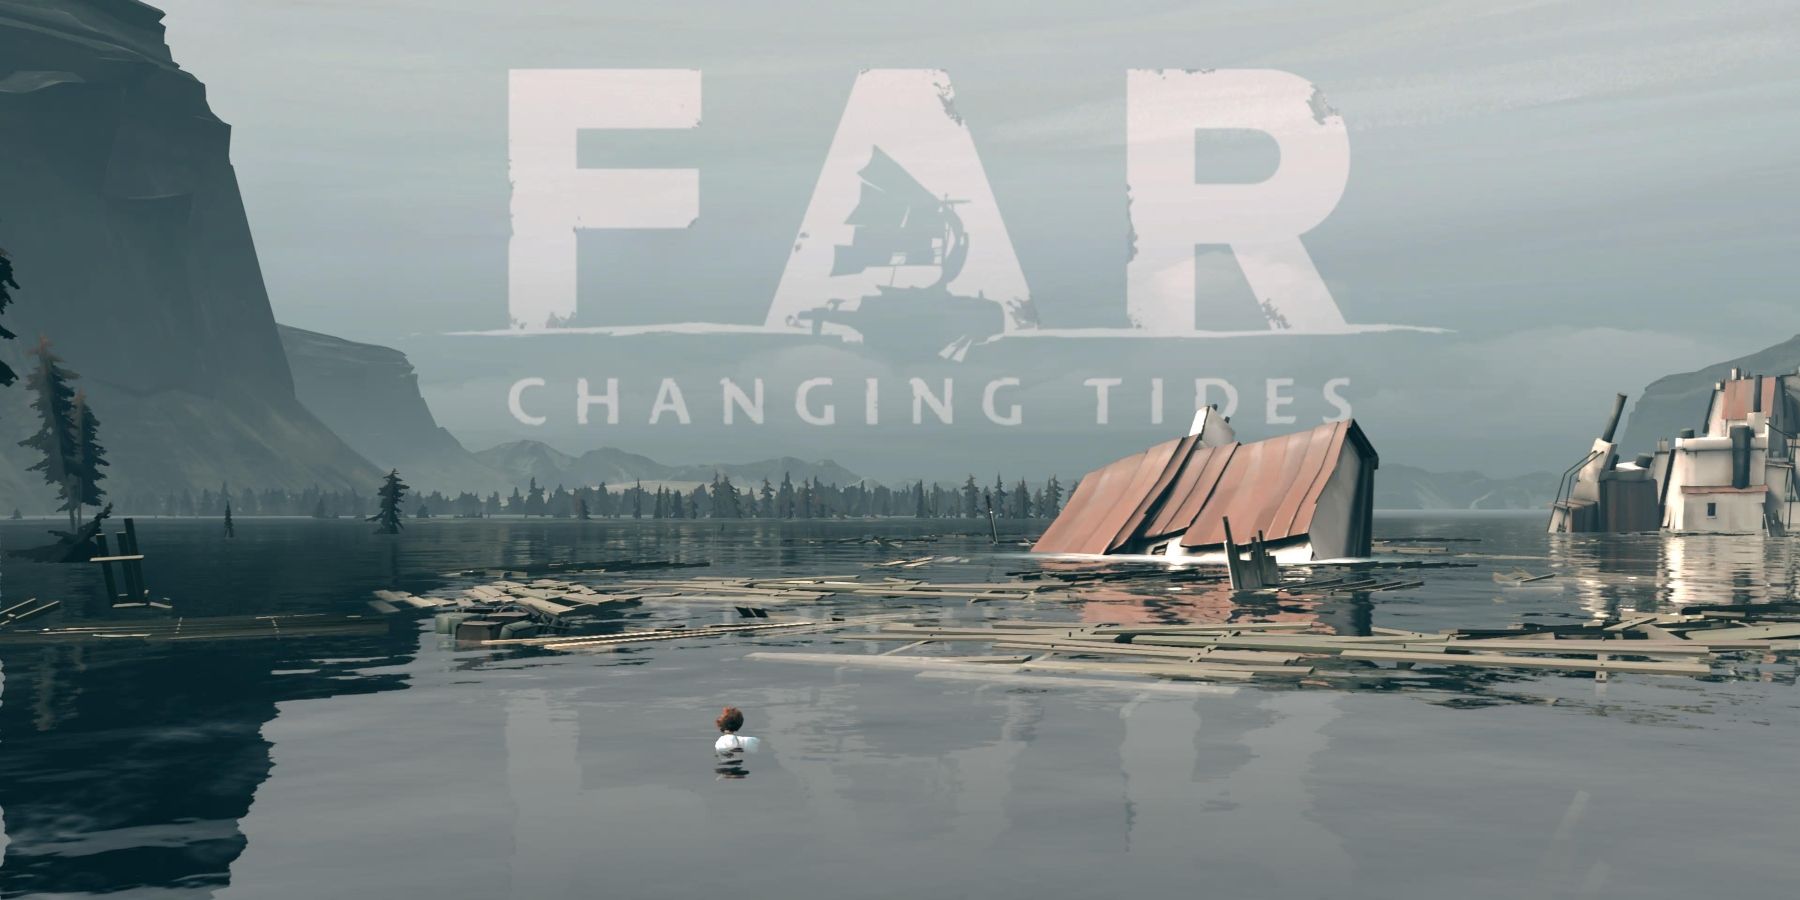 far-changing-tides-1